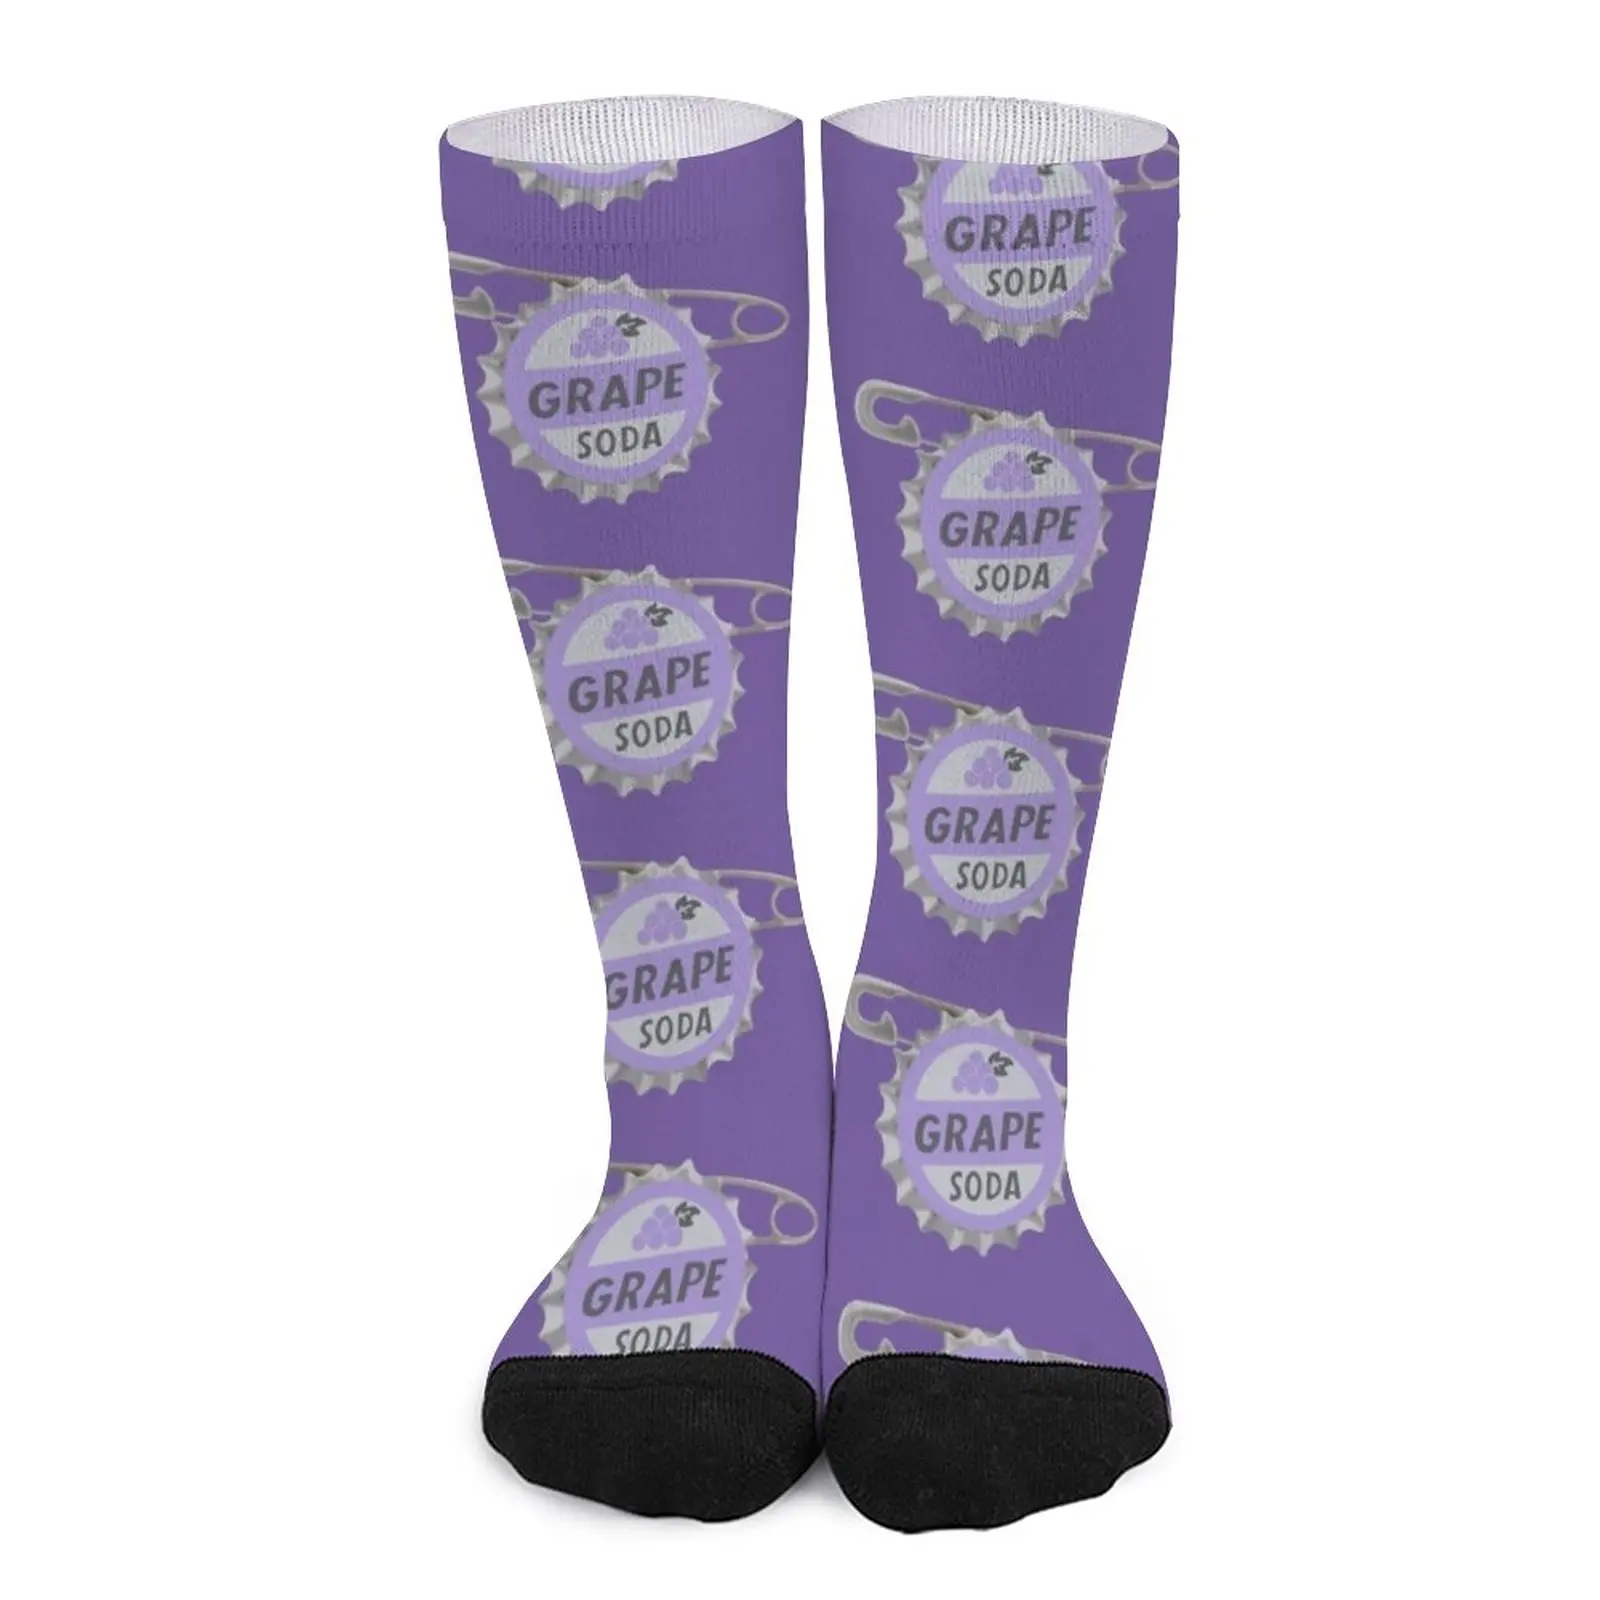 UP Grape Soda Pin Socks Rugby Men's socks Sock man Stockings 2 in 1 0 25%vol 0 40%brix adjustable grape